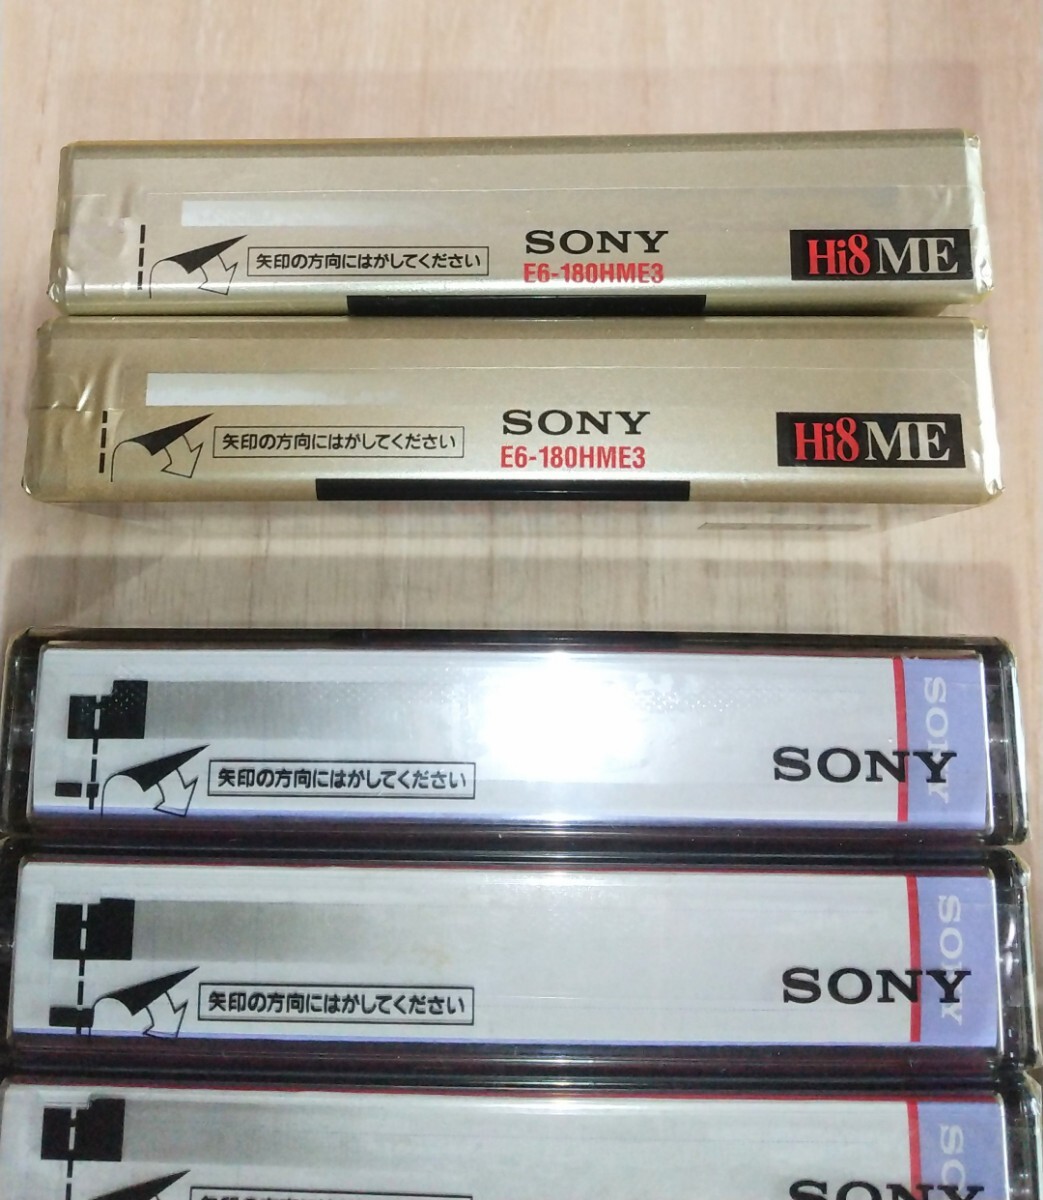  Showa Retro [ unused goods 5 pcs set ]* SONY Hi8 ME / Hi8 MP * Sony / 8mm / 180 minute / 120 minute / most high resolution / video / antique 